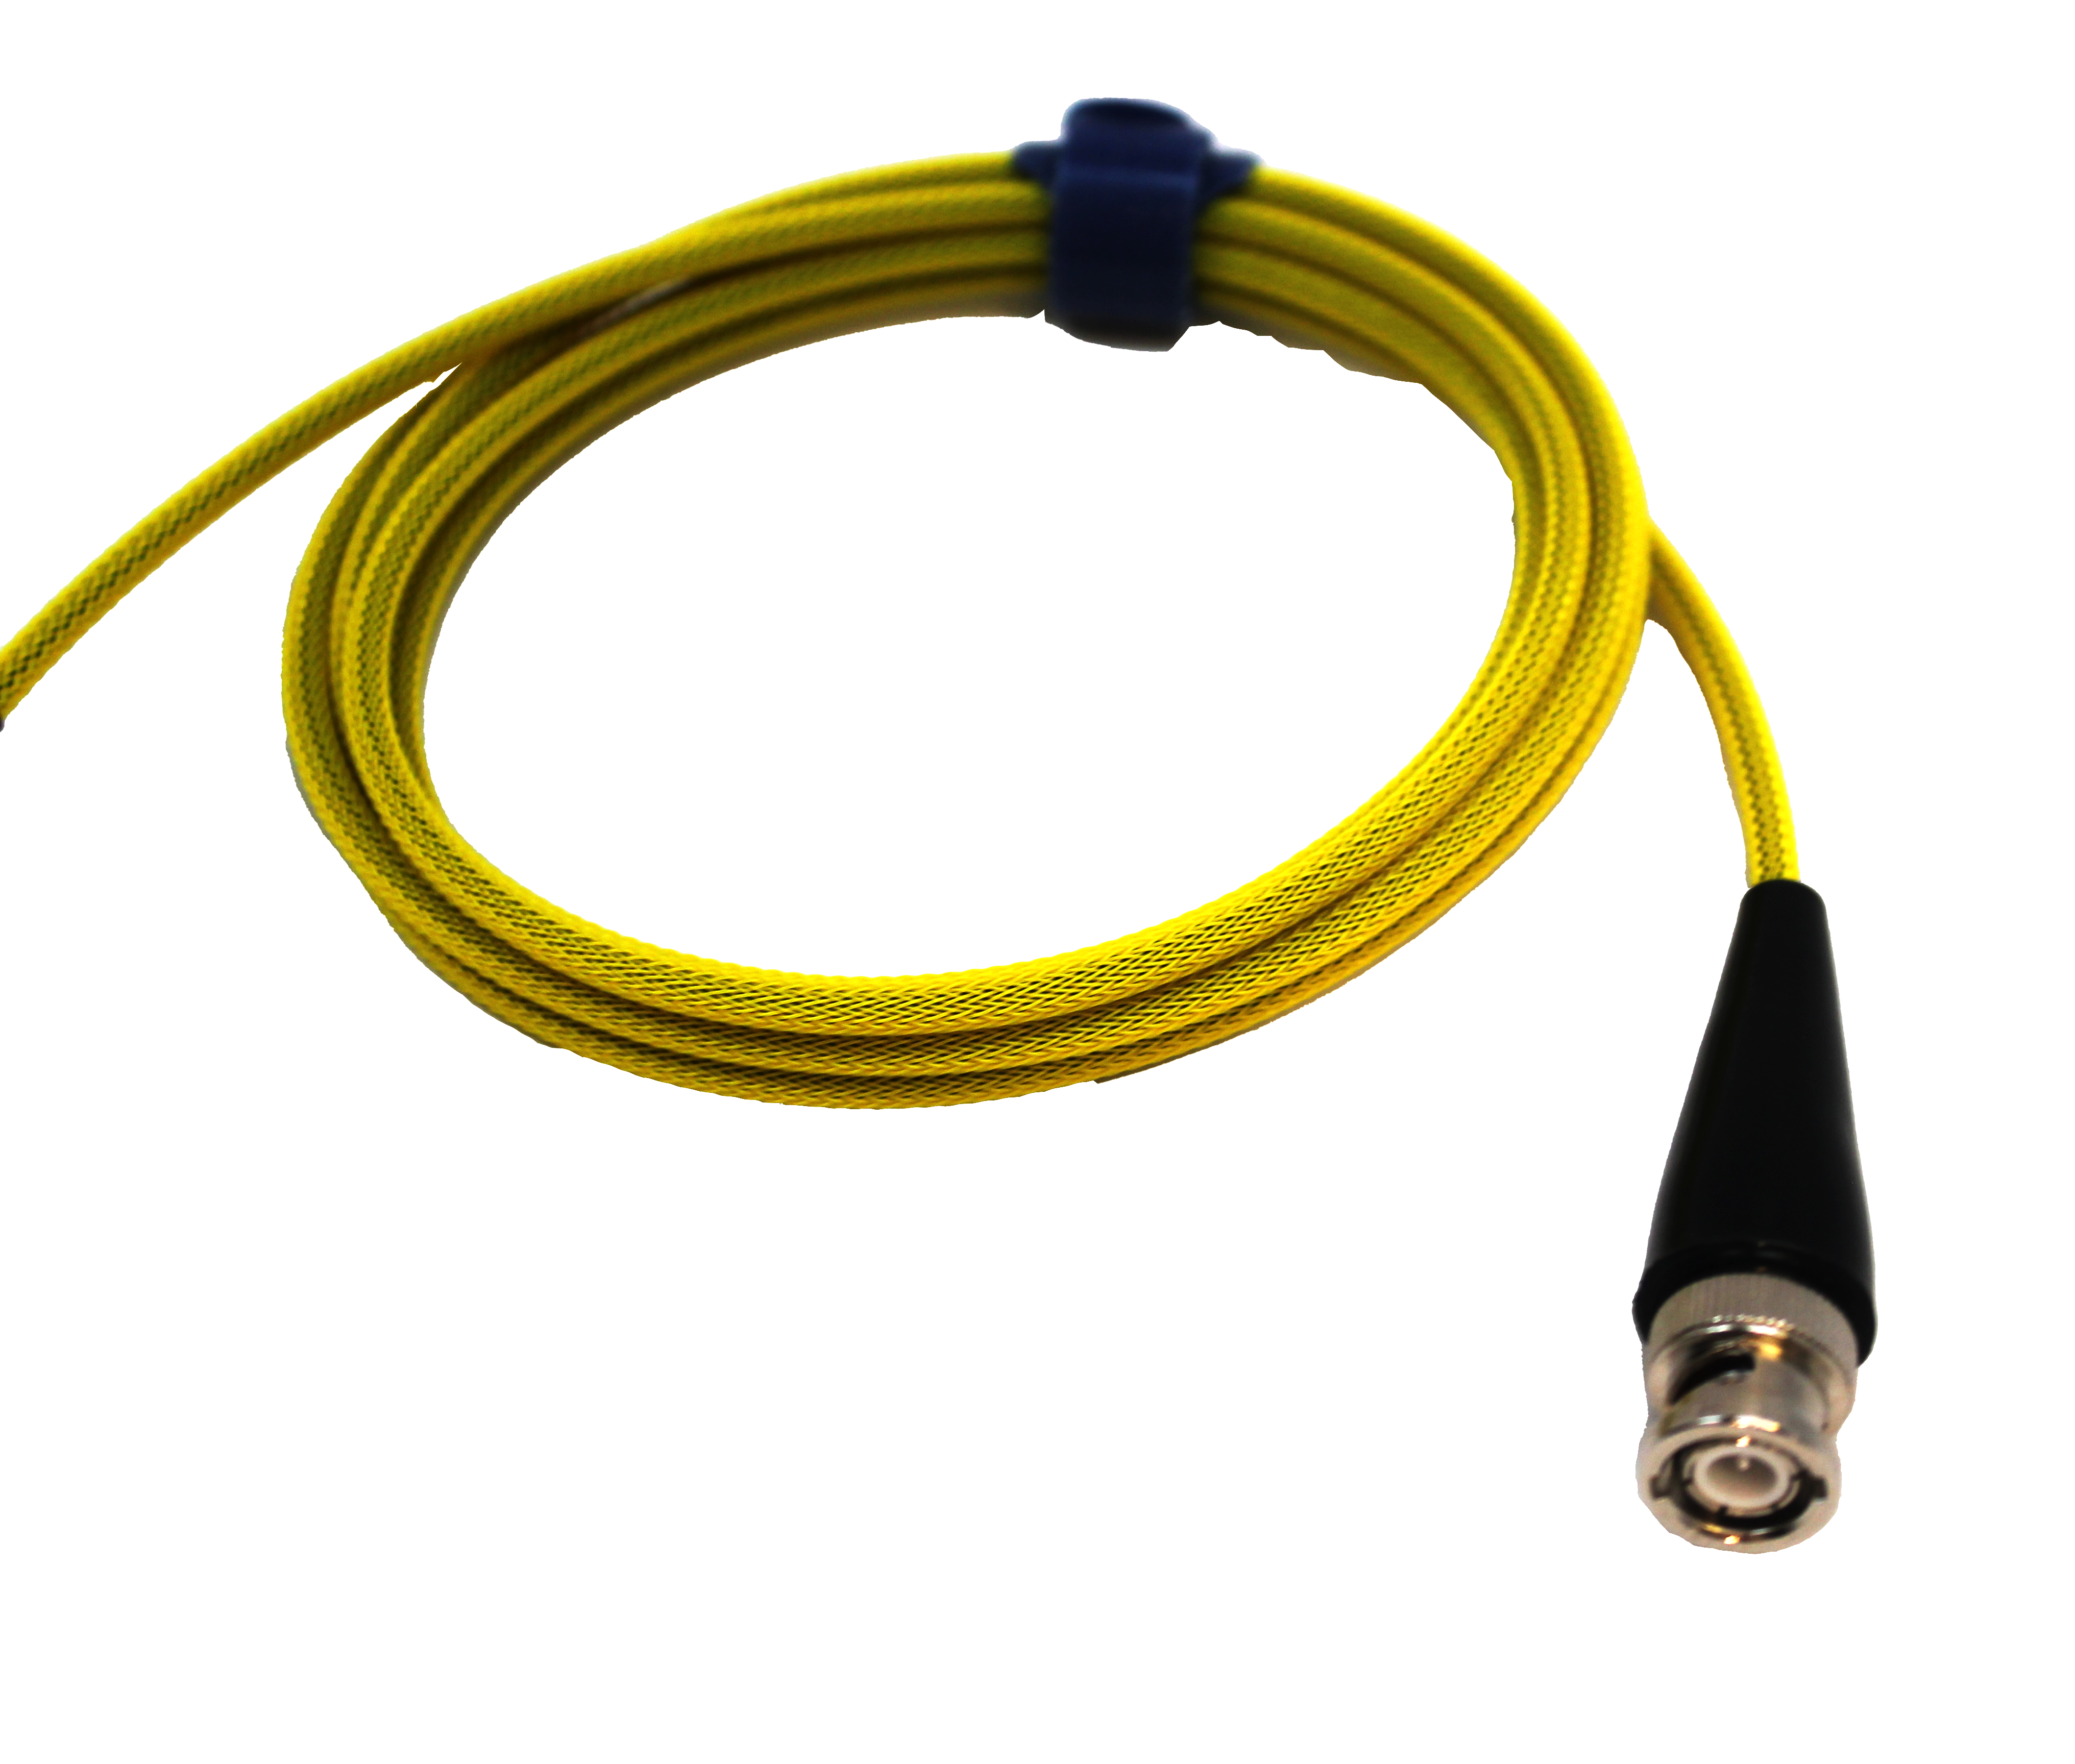 Berg Flame Yellow LEMO 00 Straight to BNC, 6'ft (Feet) Ultrasonic Cable